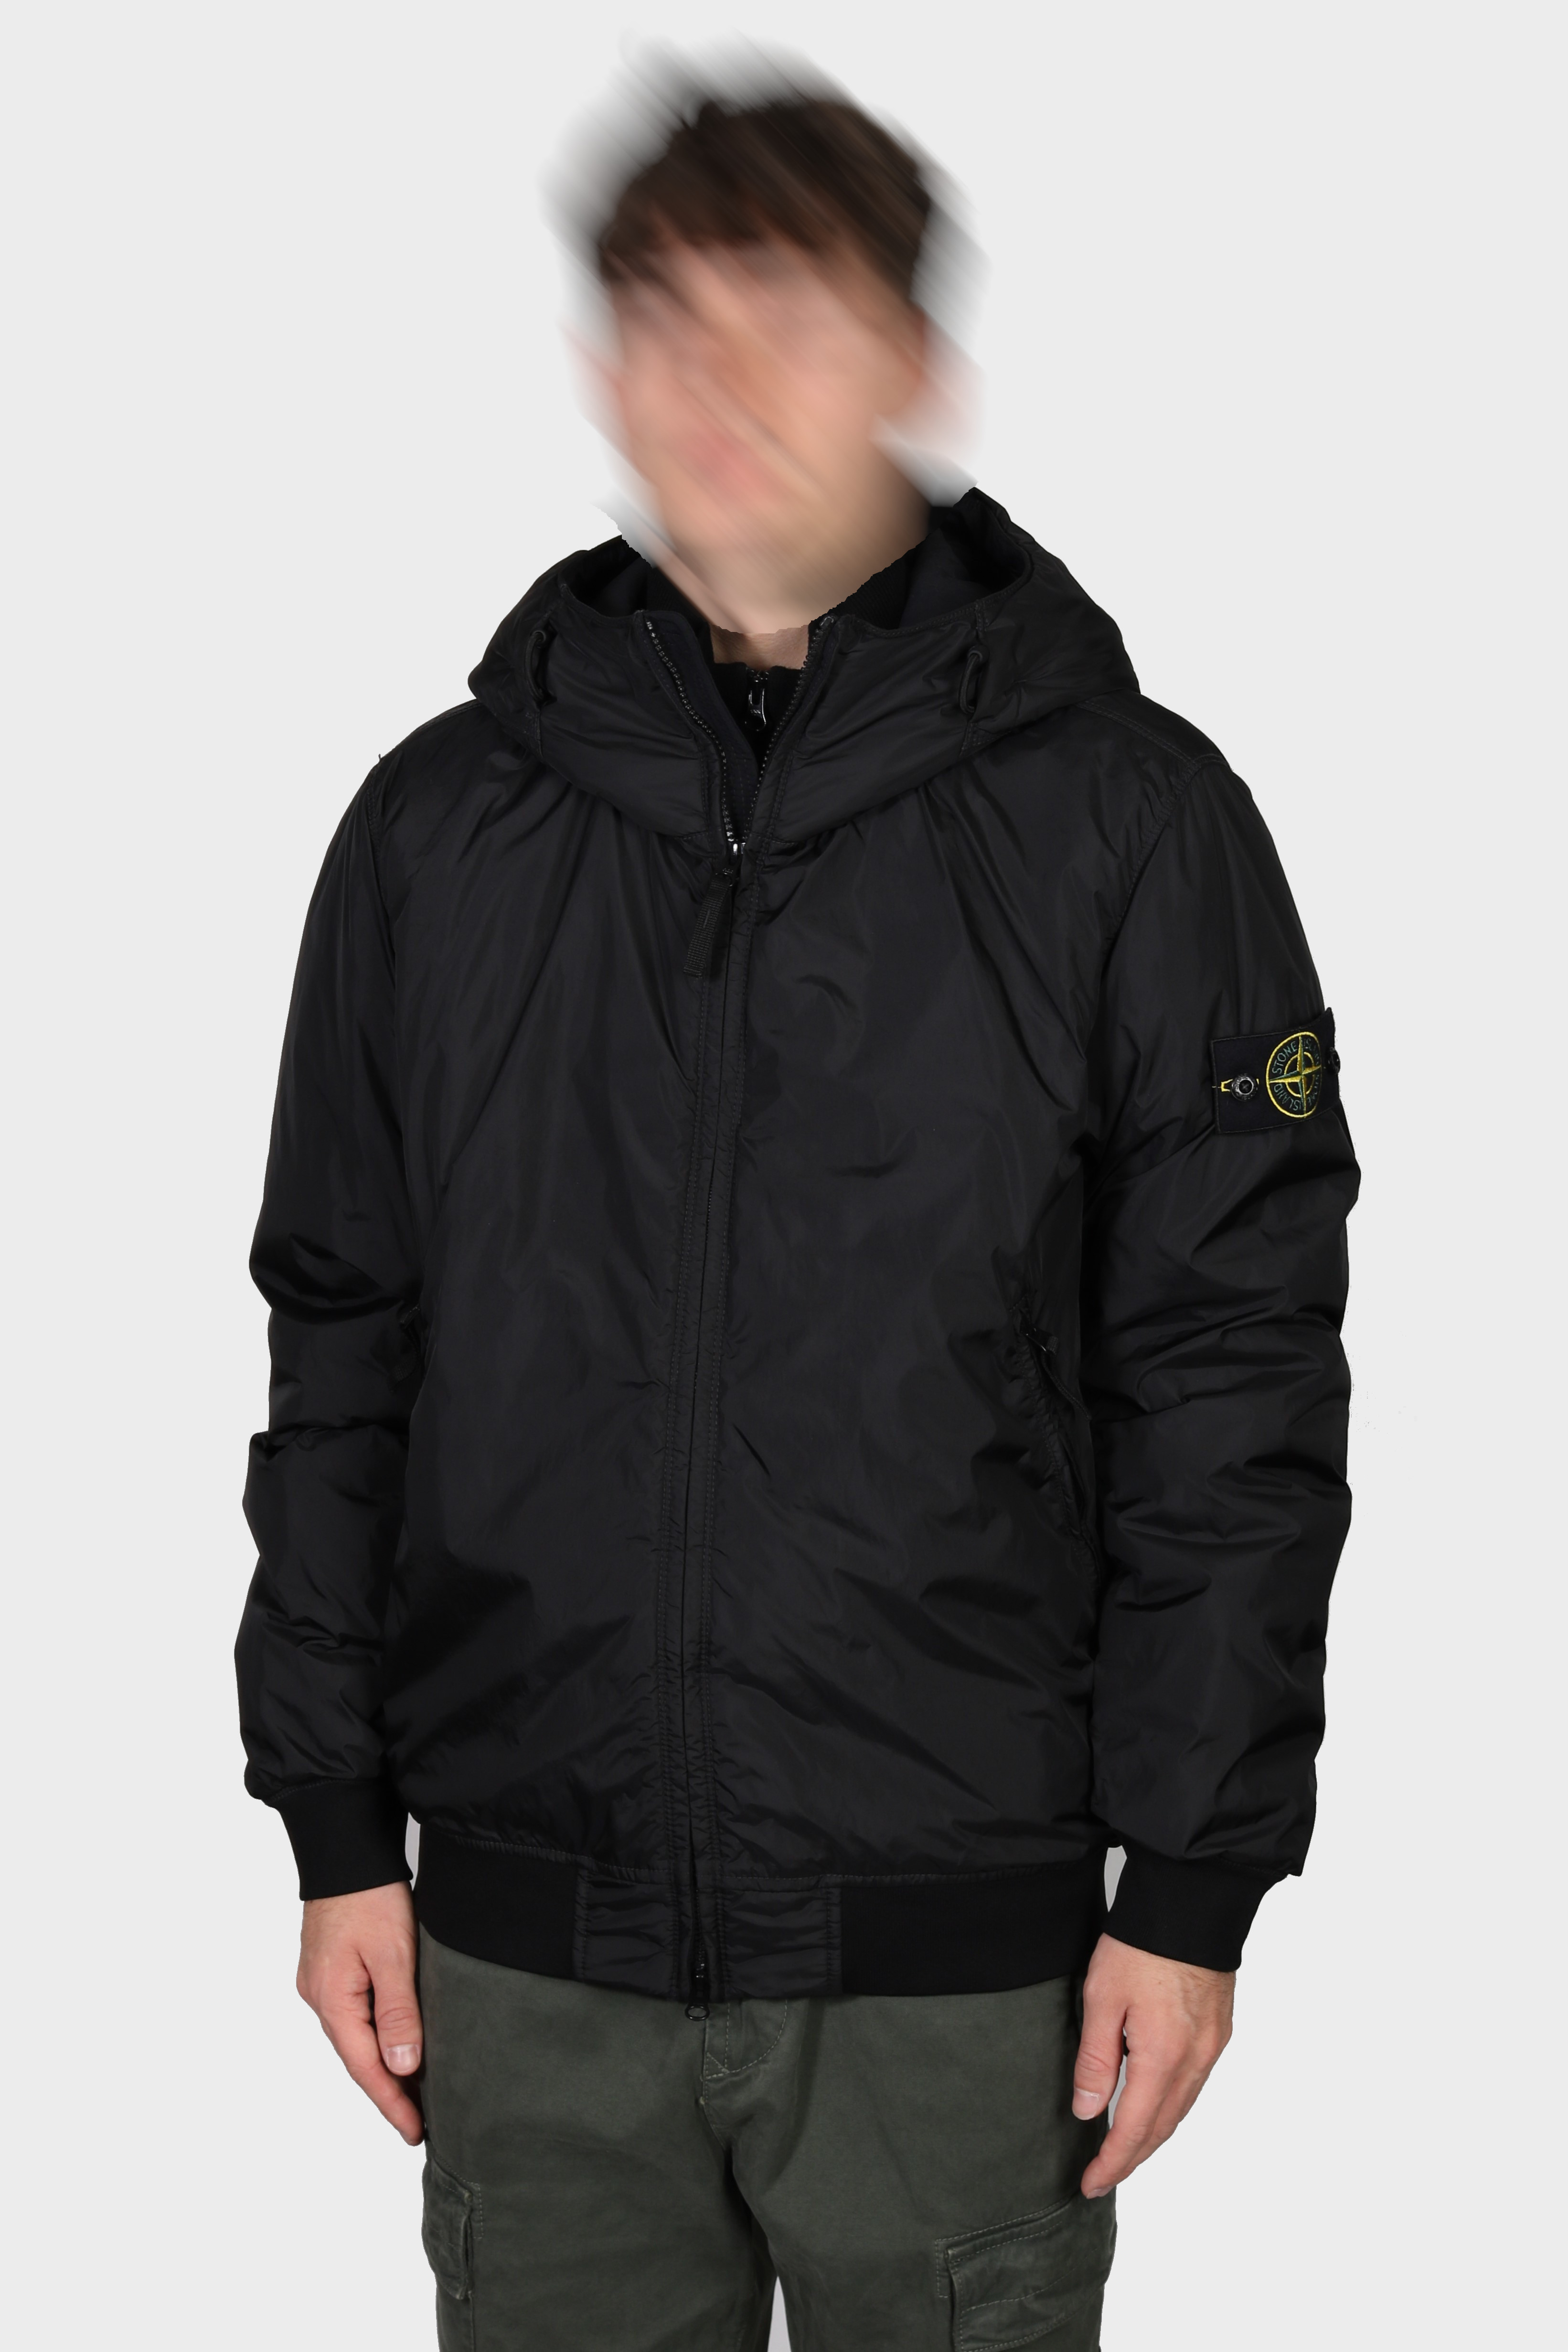 STONE ISLAND Garment Dyed Crinkle Reps Hooded Jacket in Black